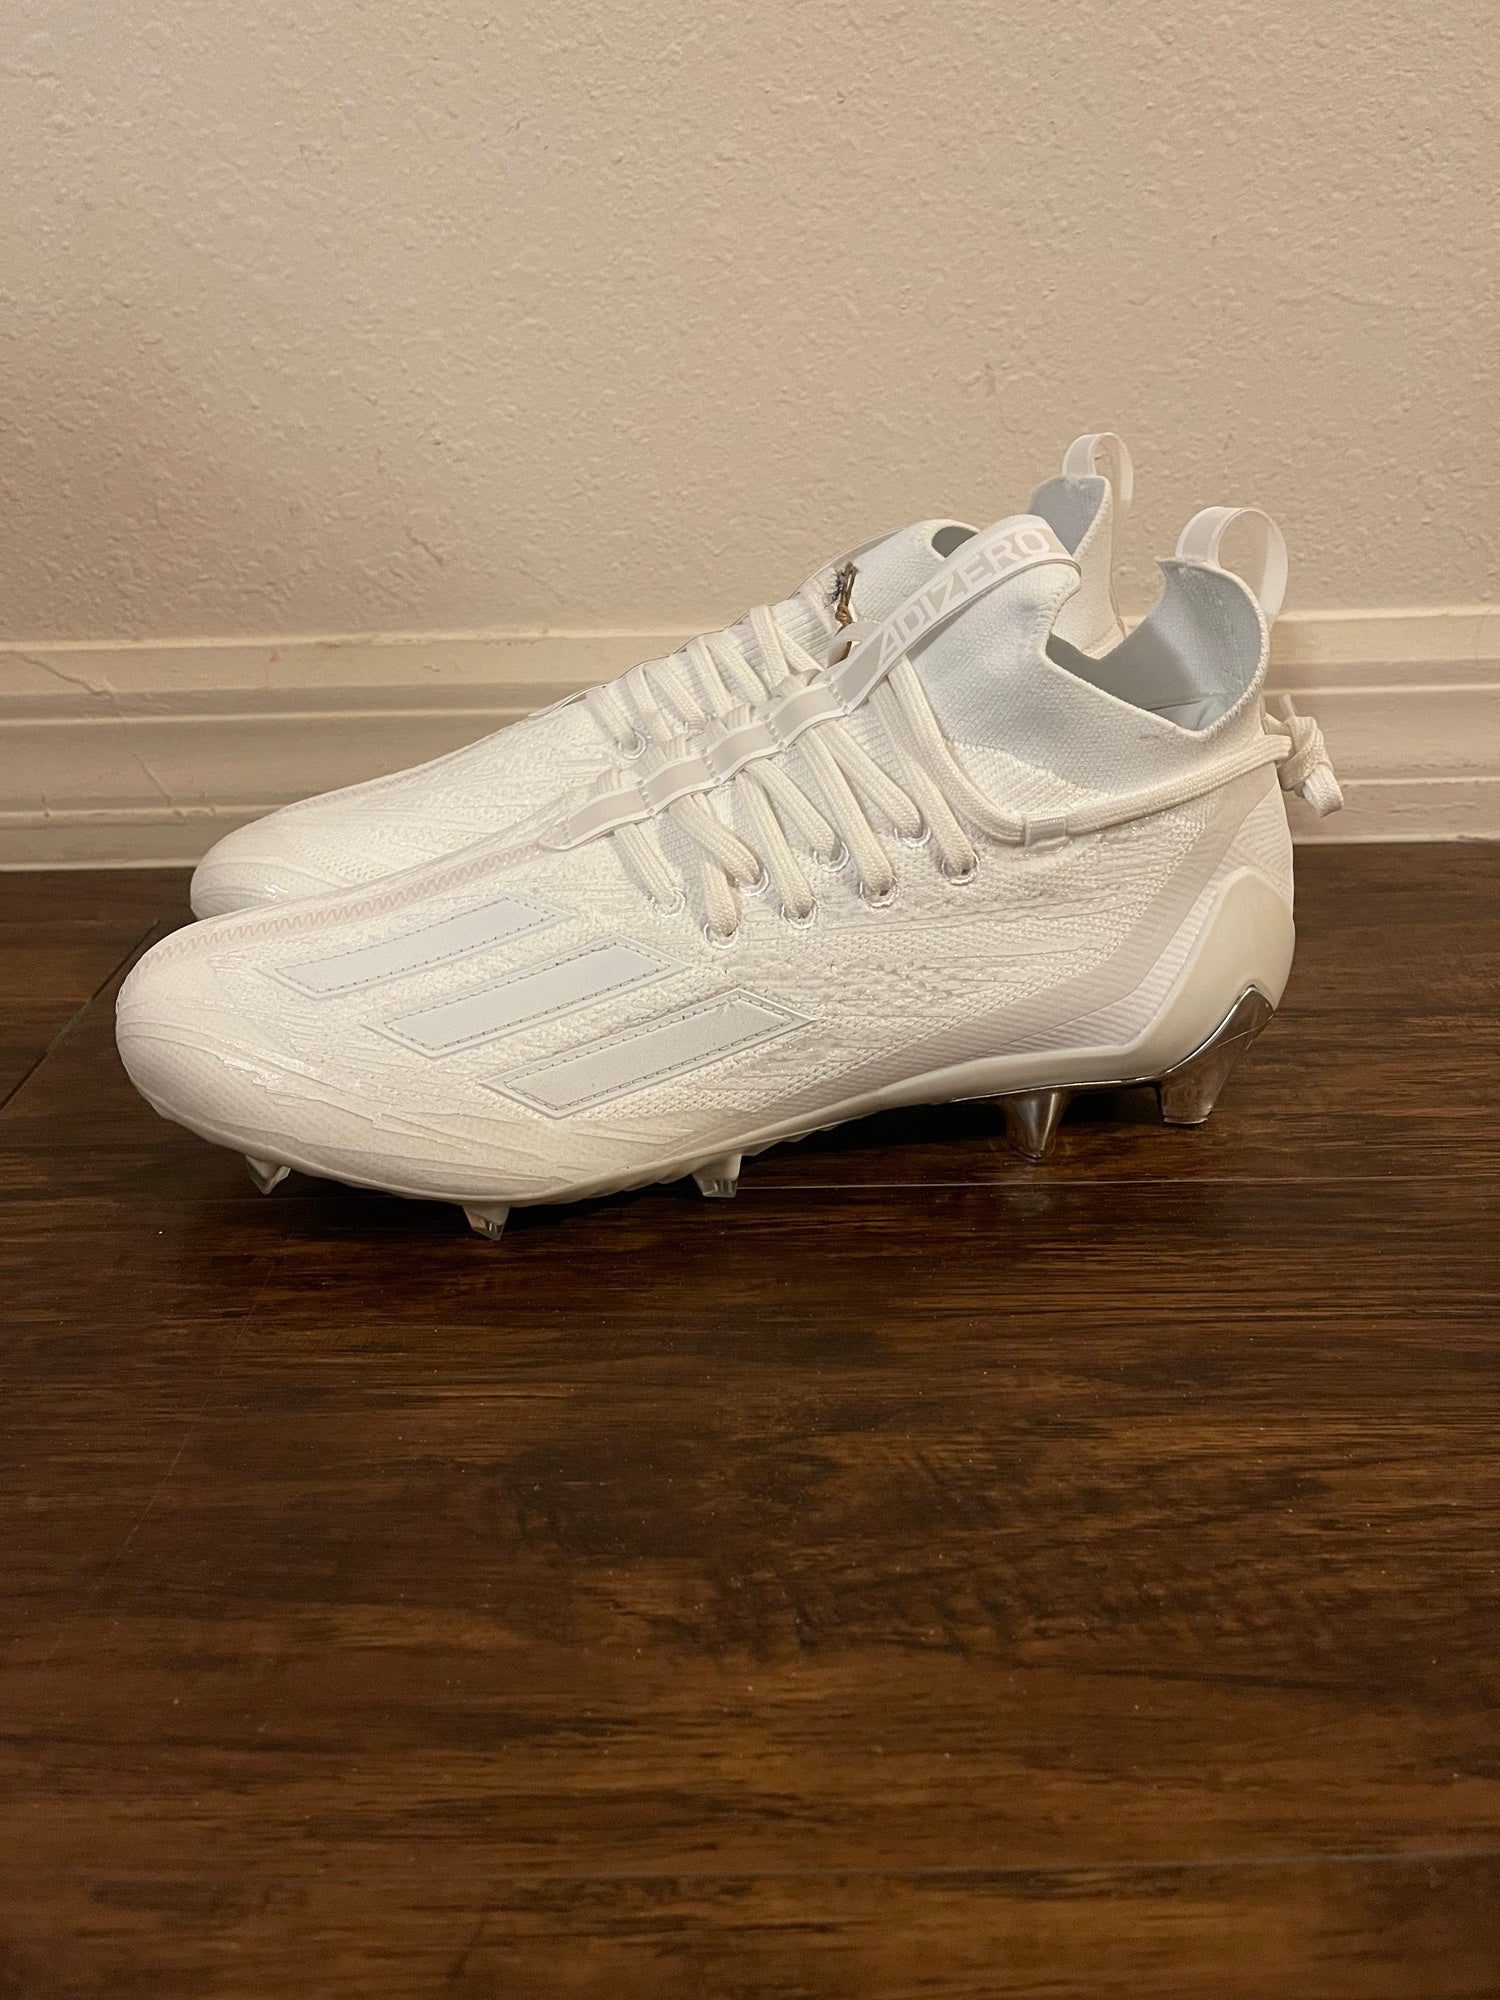 Adidas Adizero Primeknit White/Silver Football Cleats Size 8.5